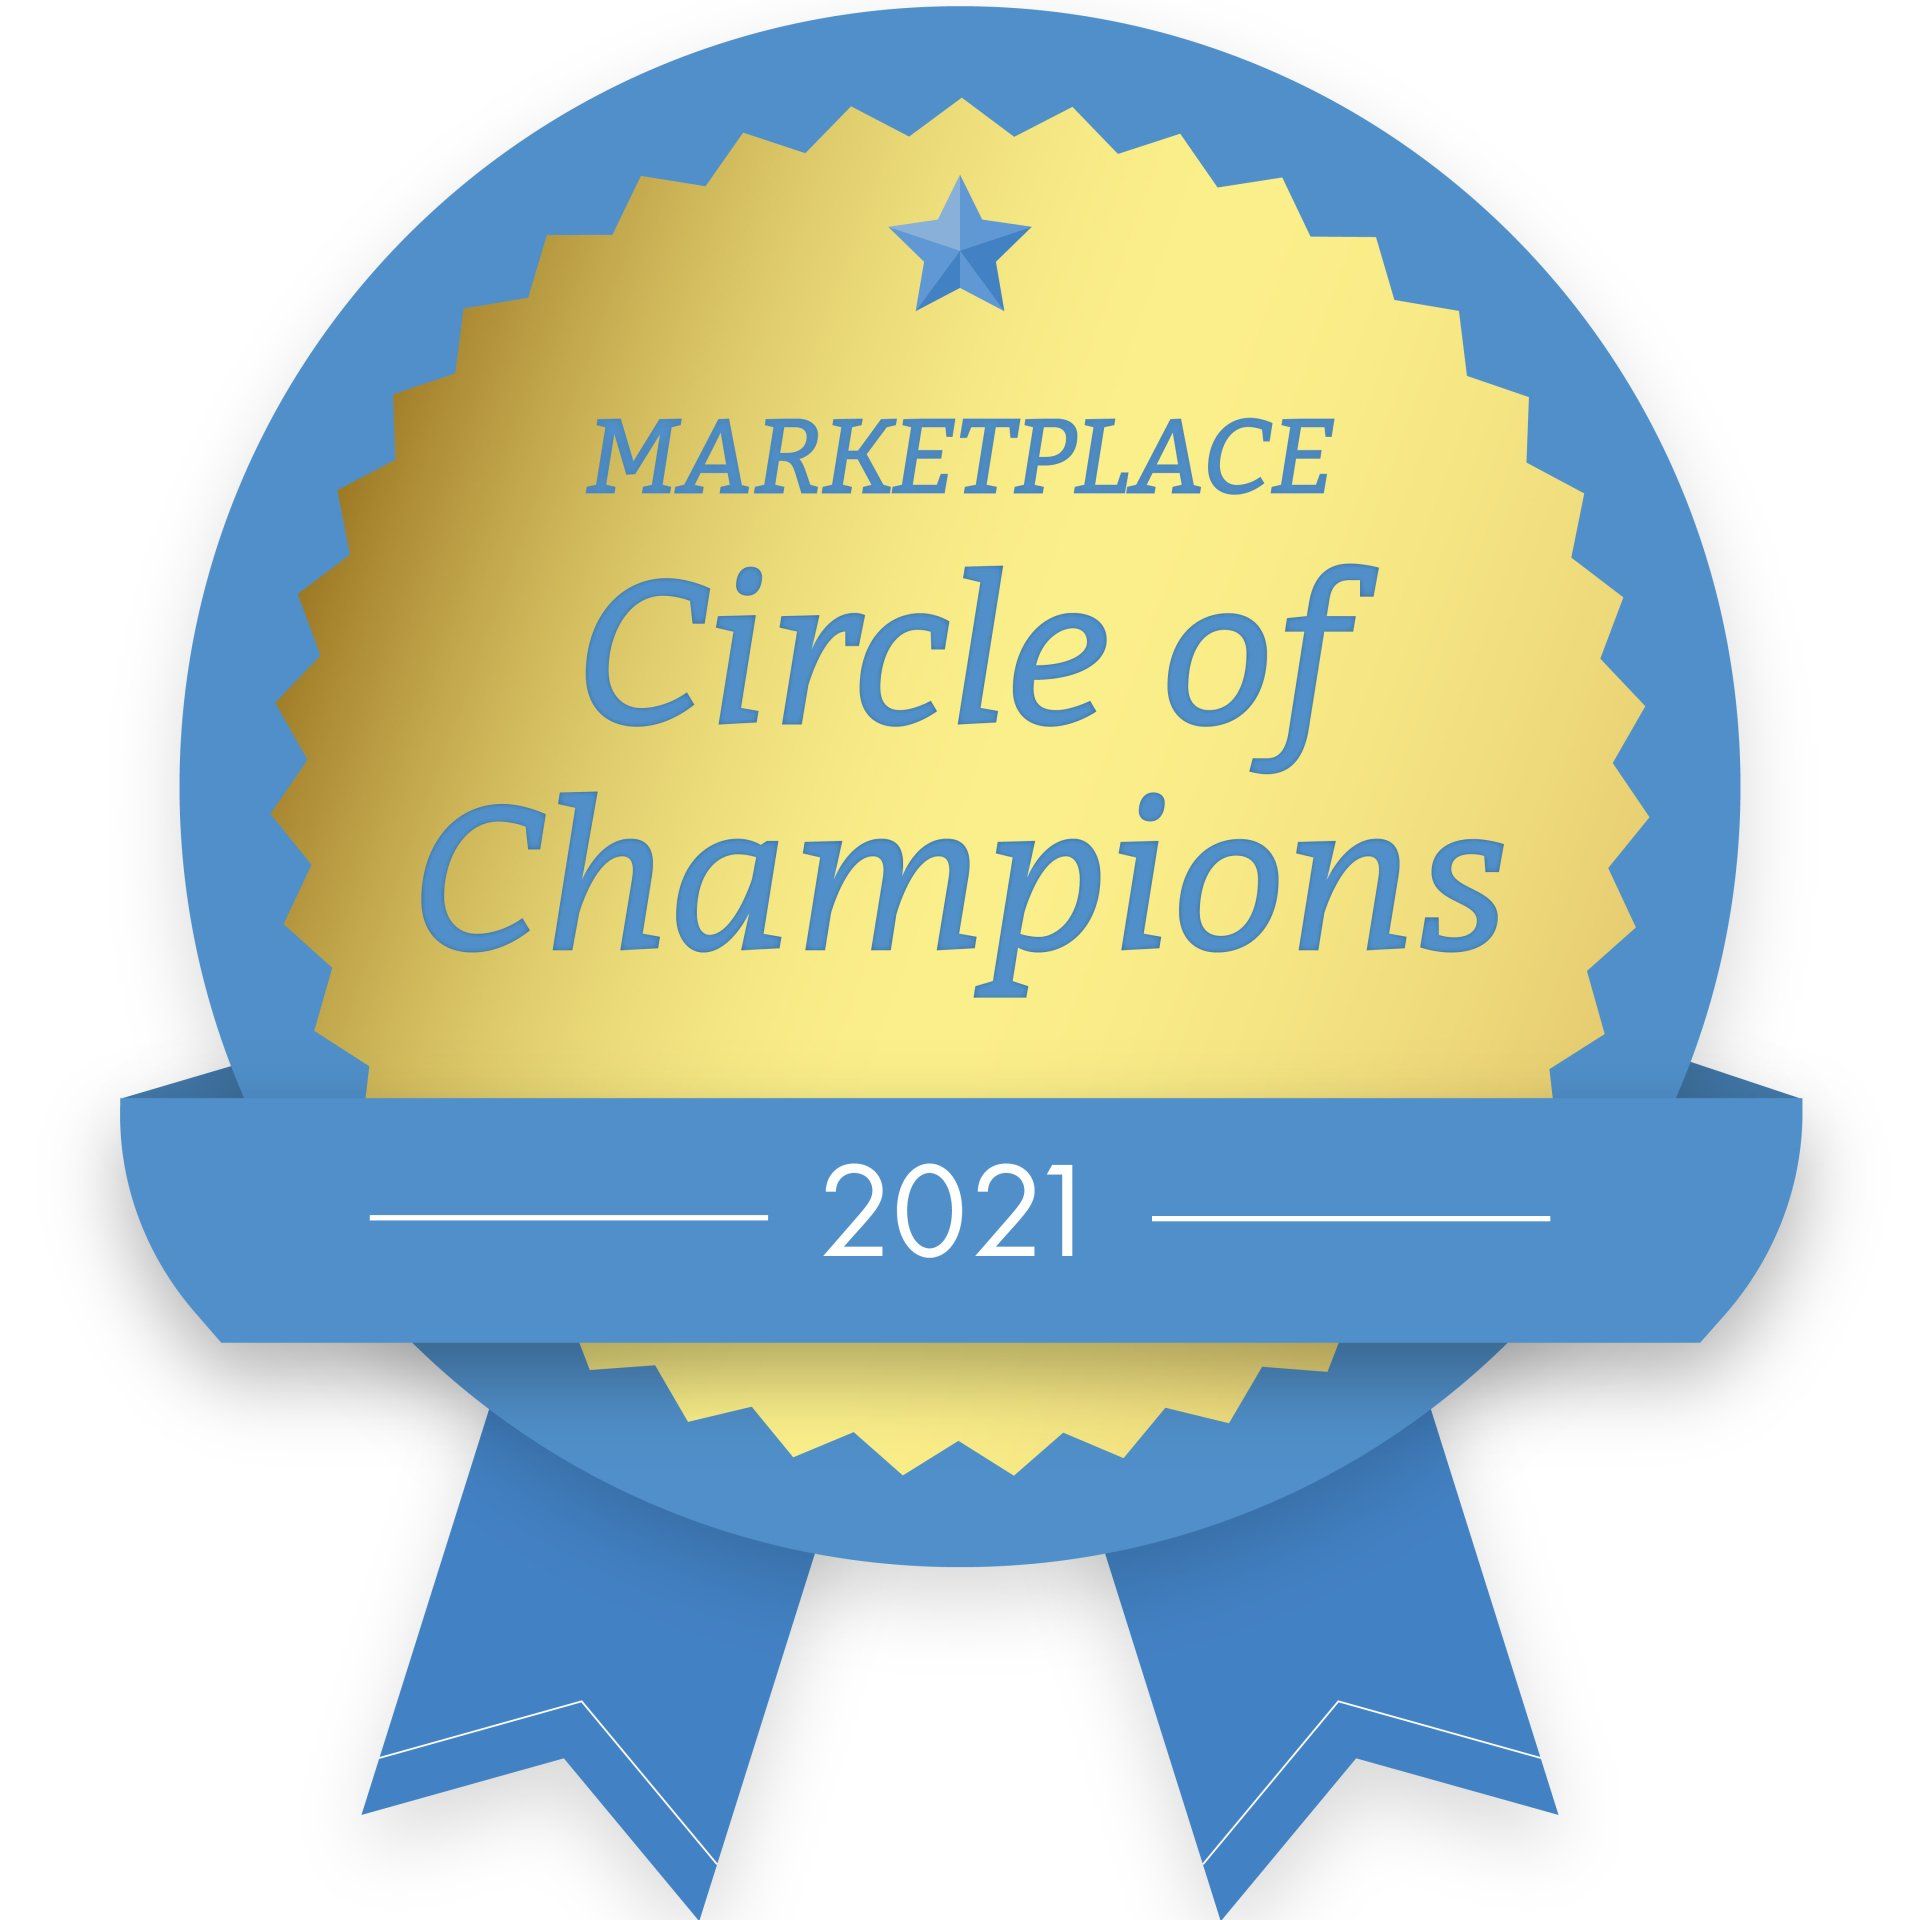 Marketplace Circle of Champions 2021 - Badge